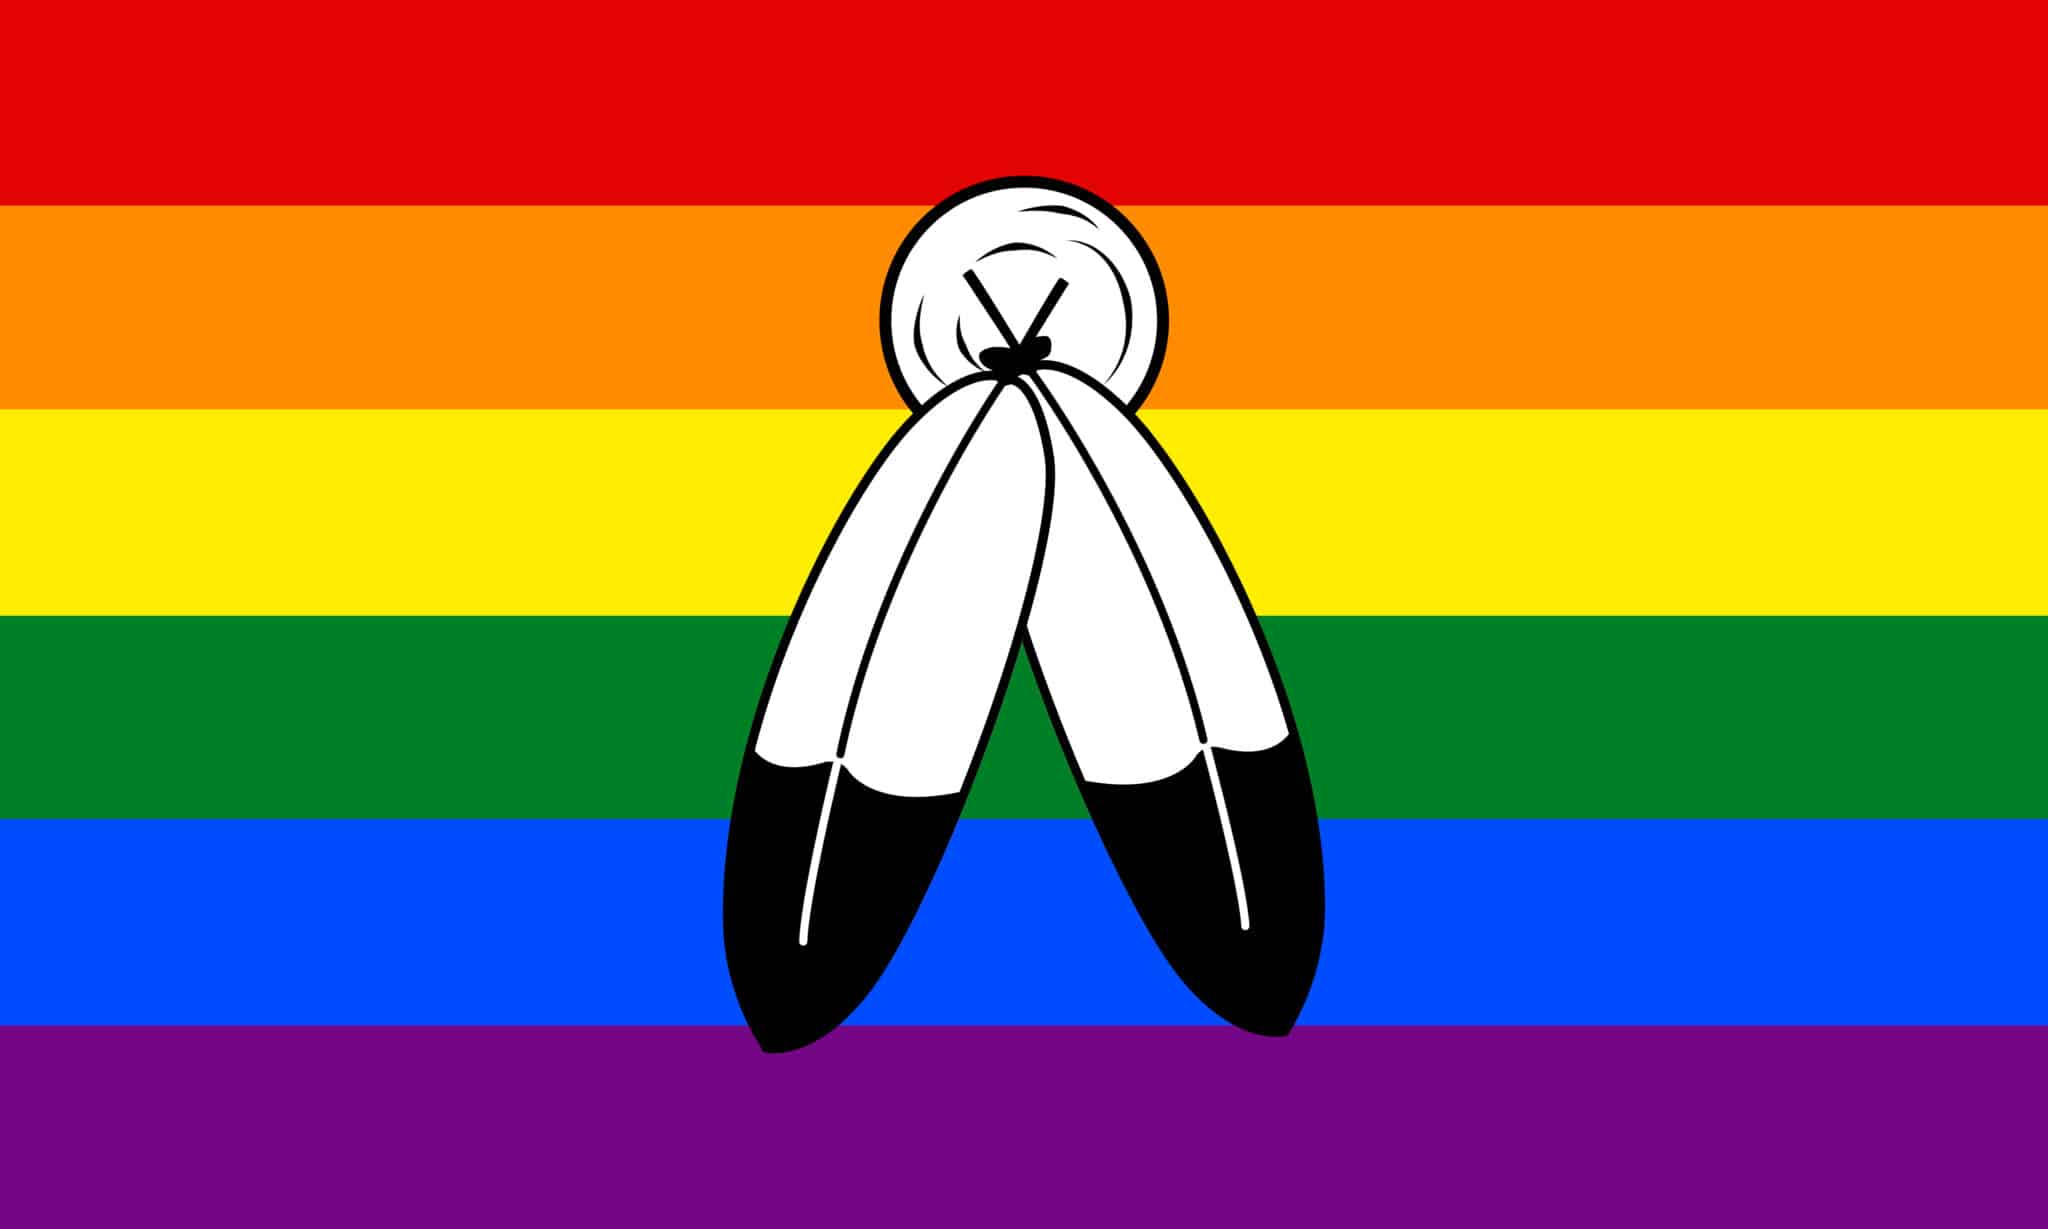 Two-spirit pride flag - representing the indigenous North American communities